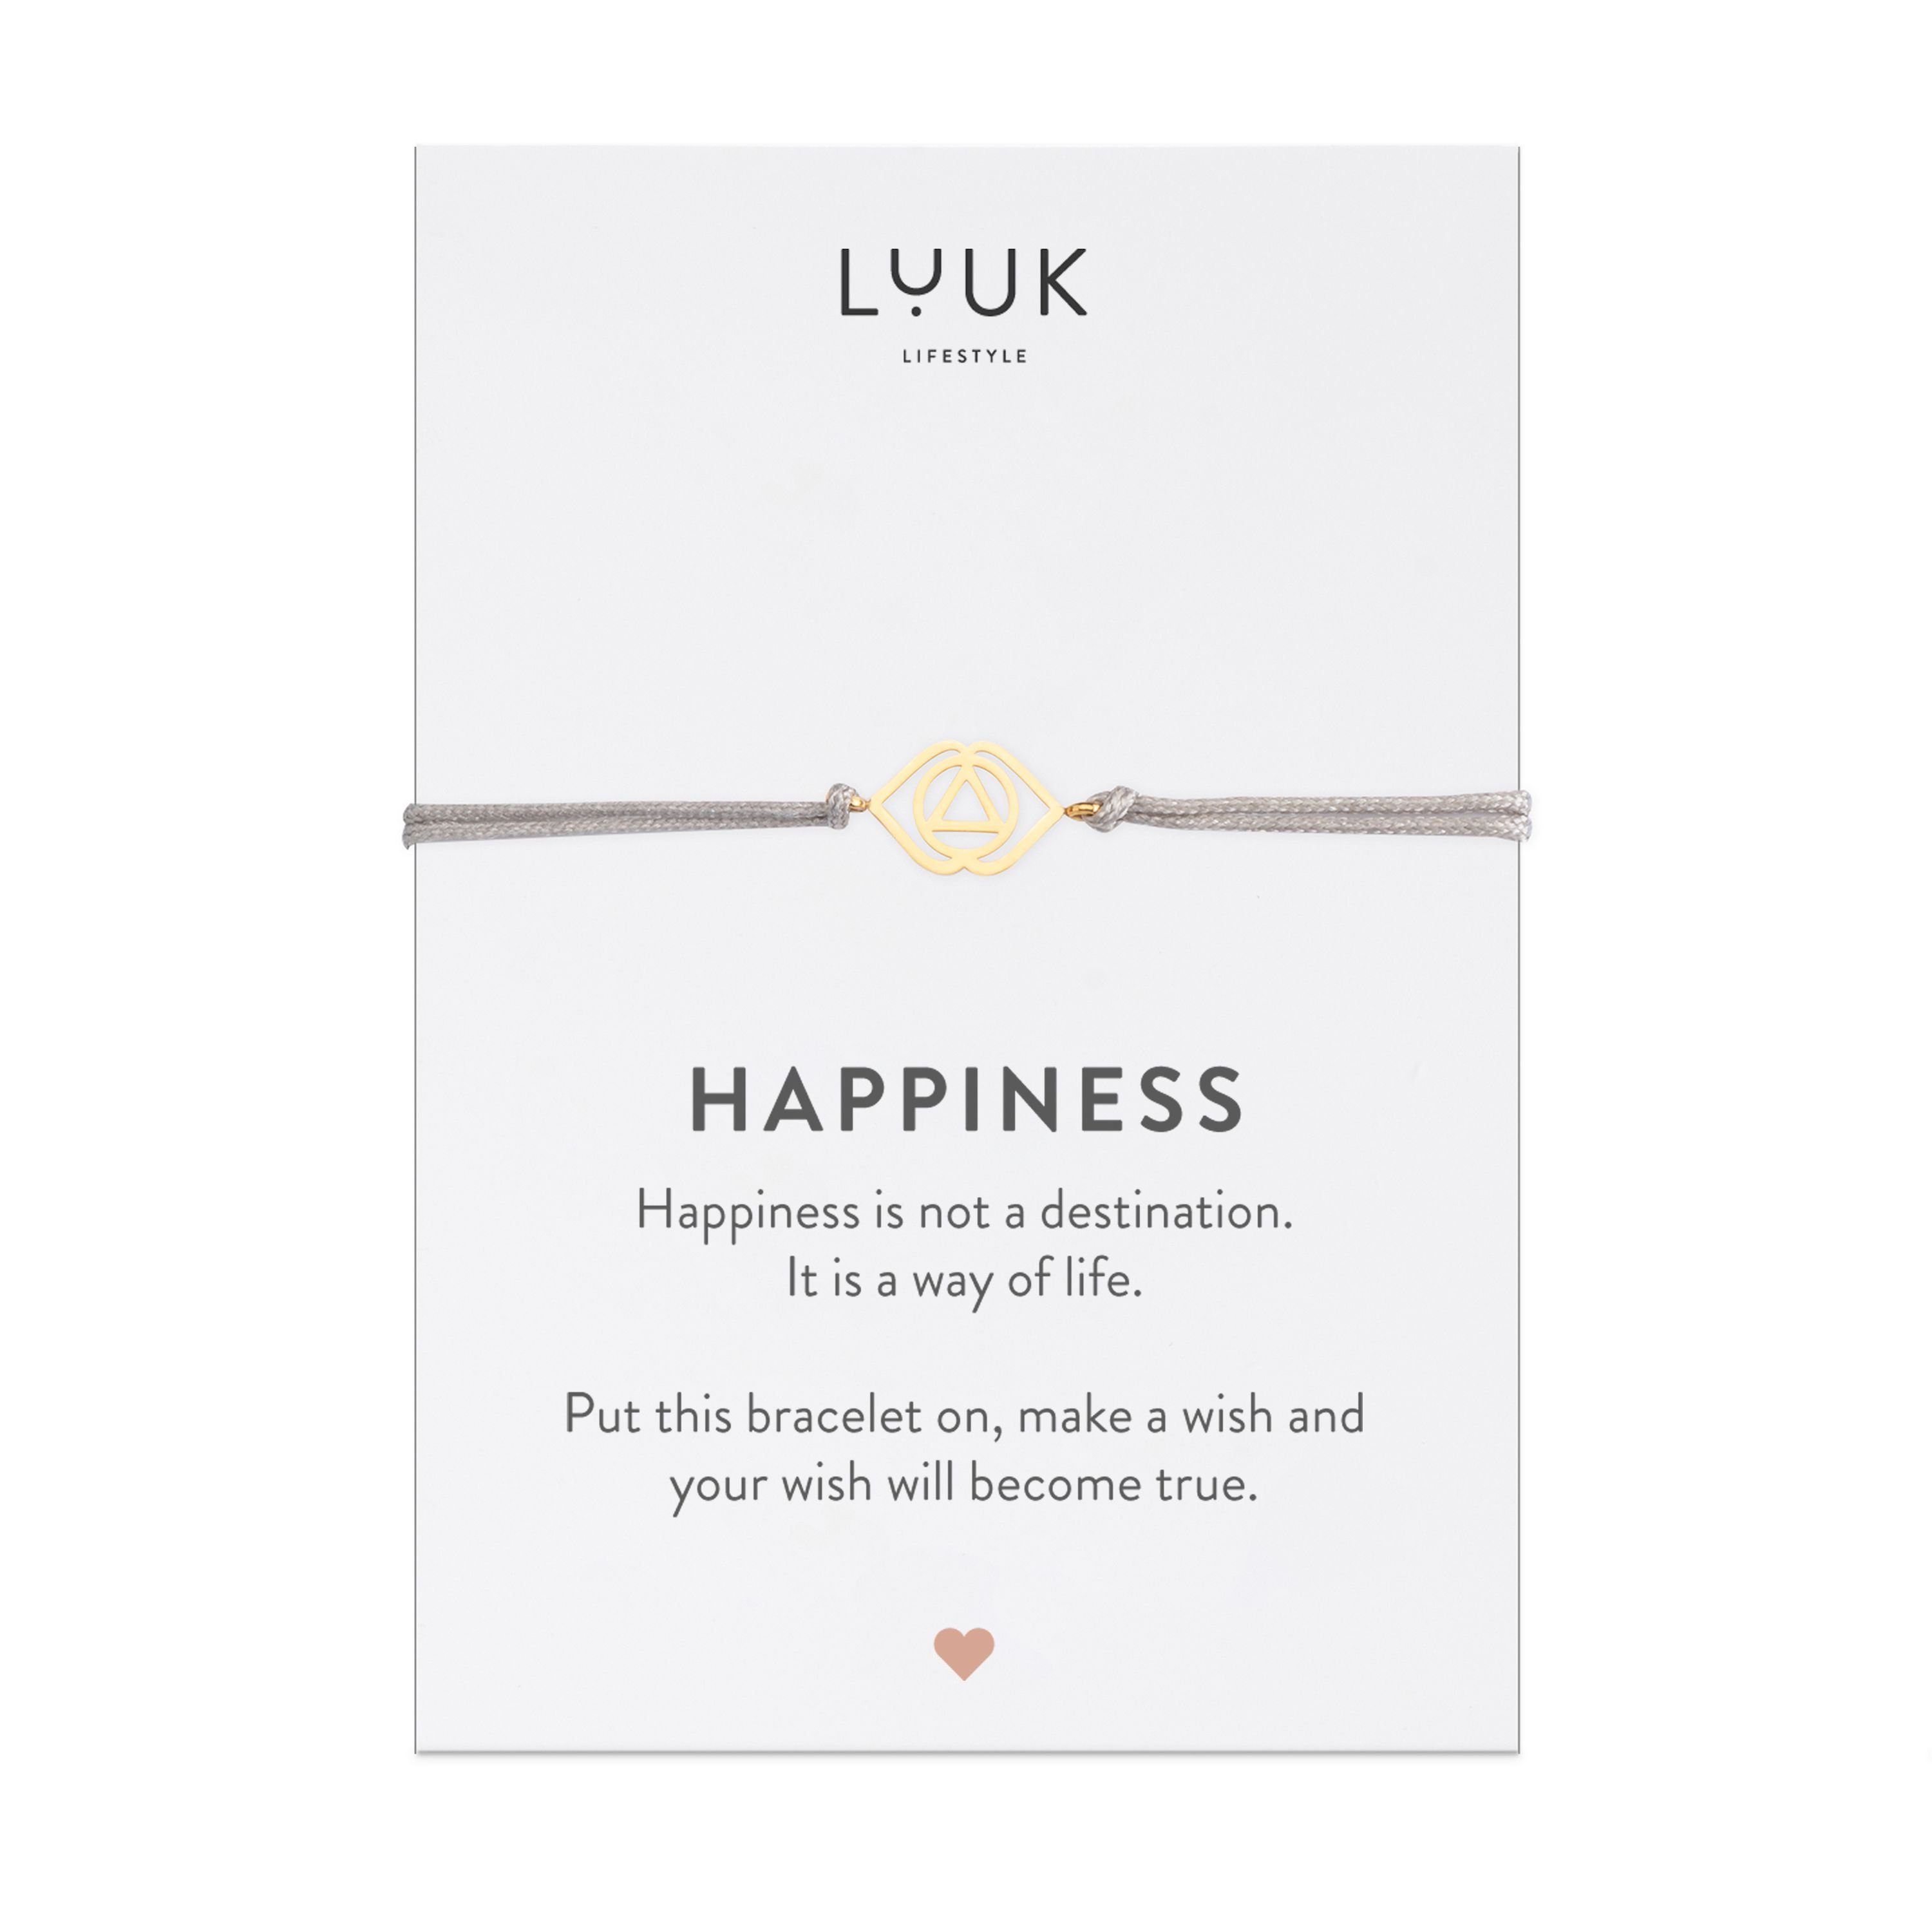 LUUK LIFESTYLE Freundschaftsarmband Dreieck, handmade, mit Happiness Spruchkarte